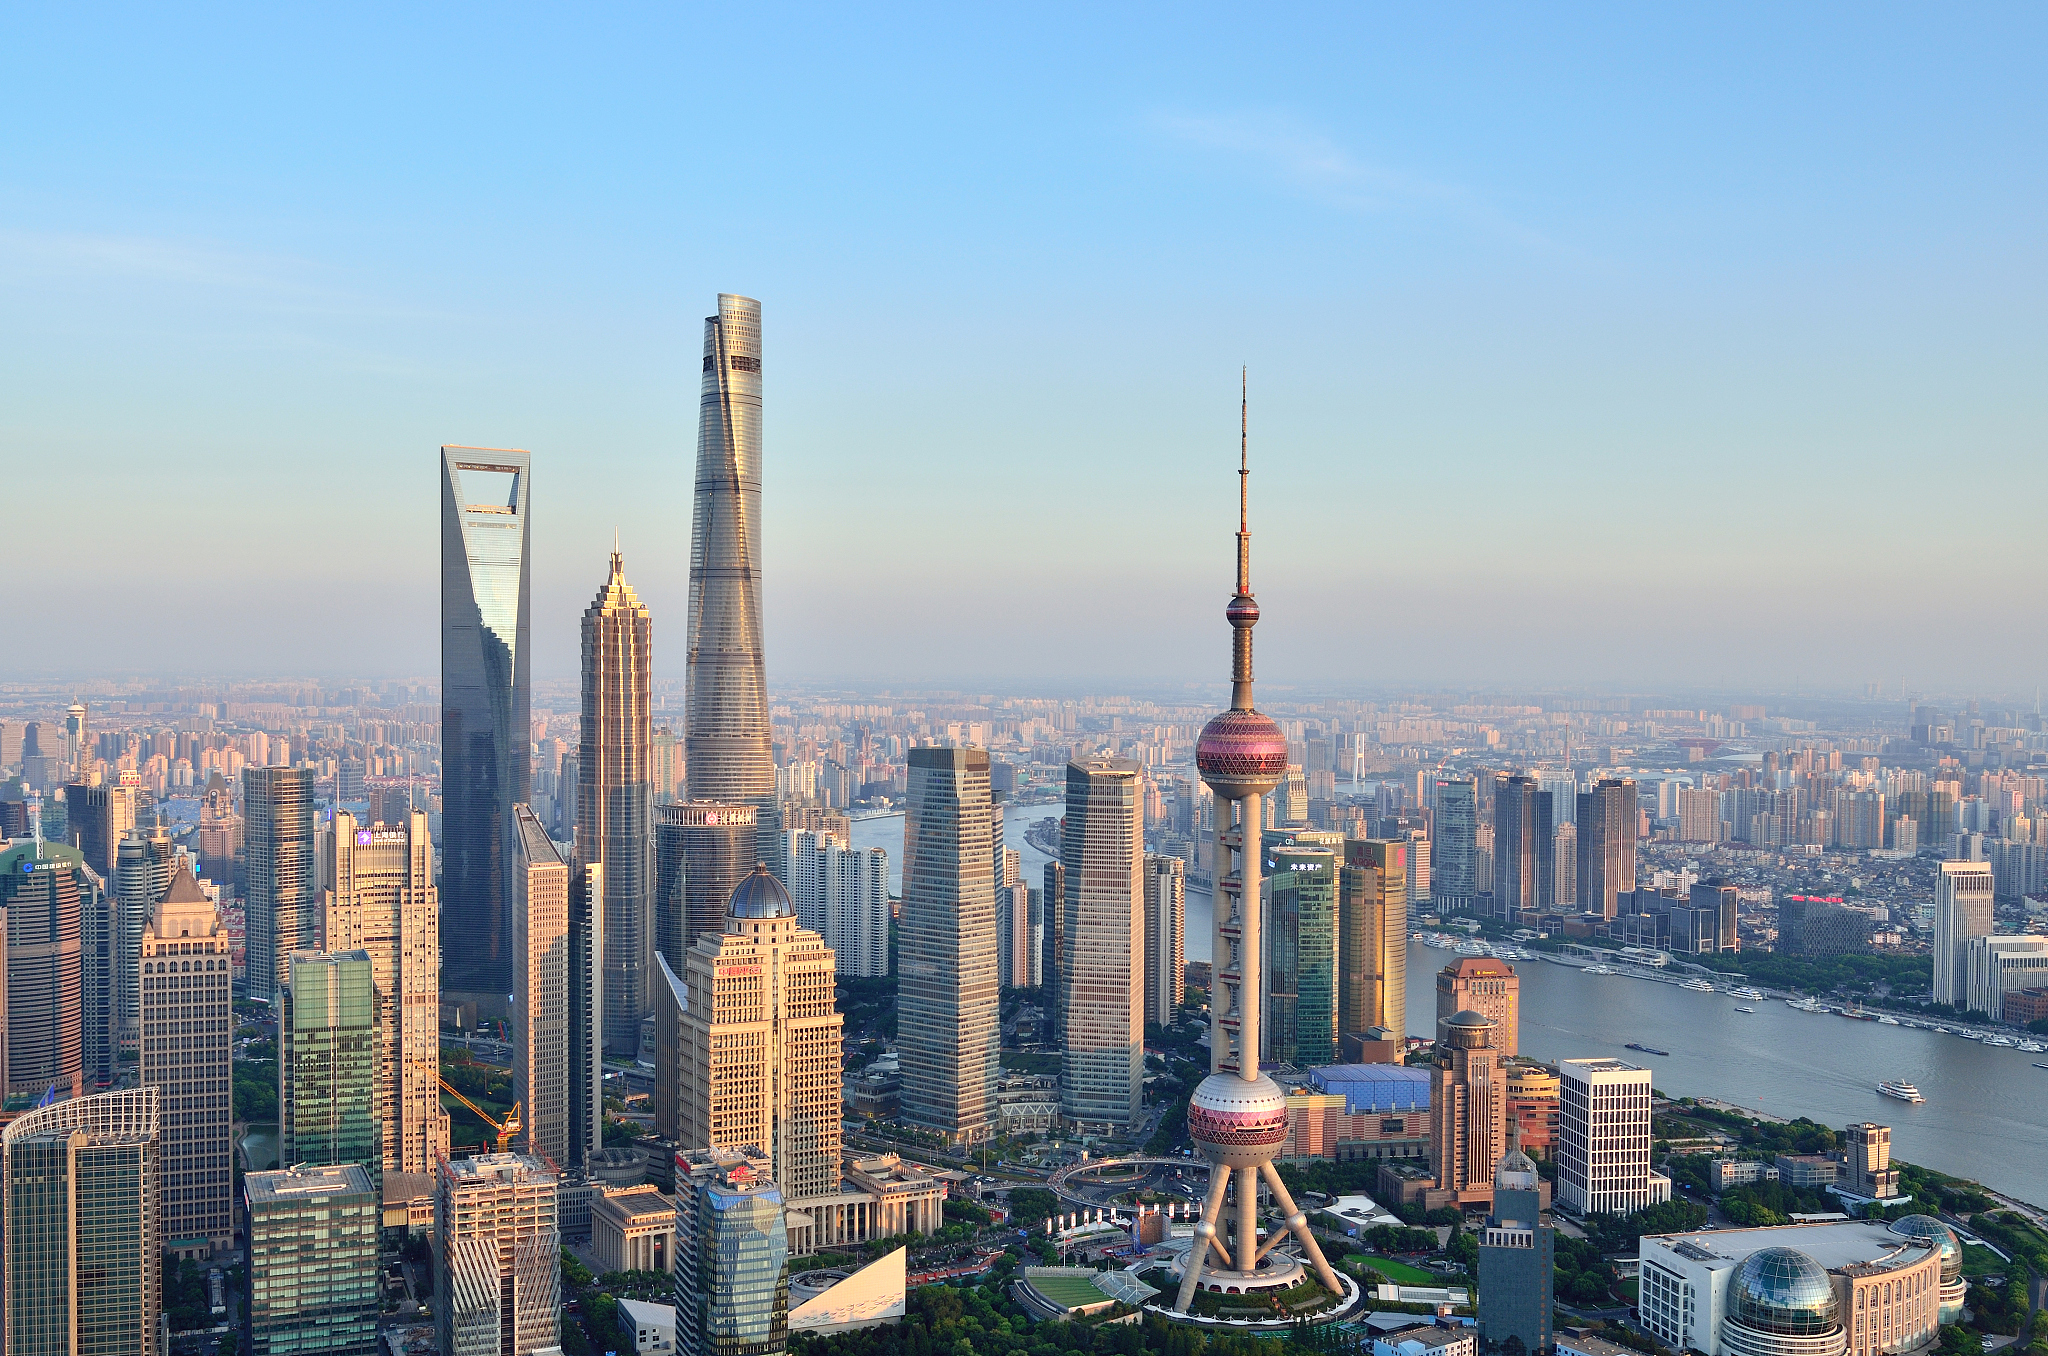 The city skyline of Shanghai, China. /CFP